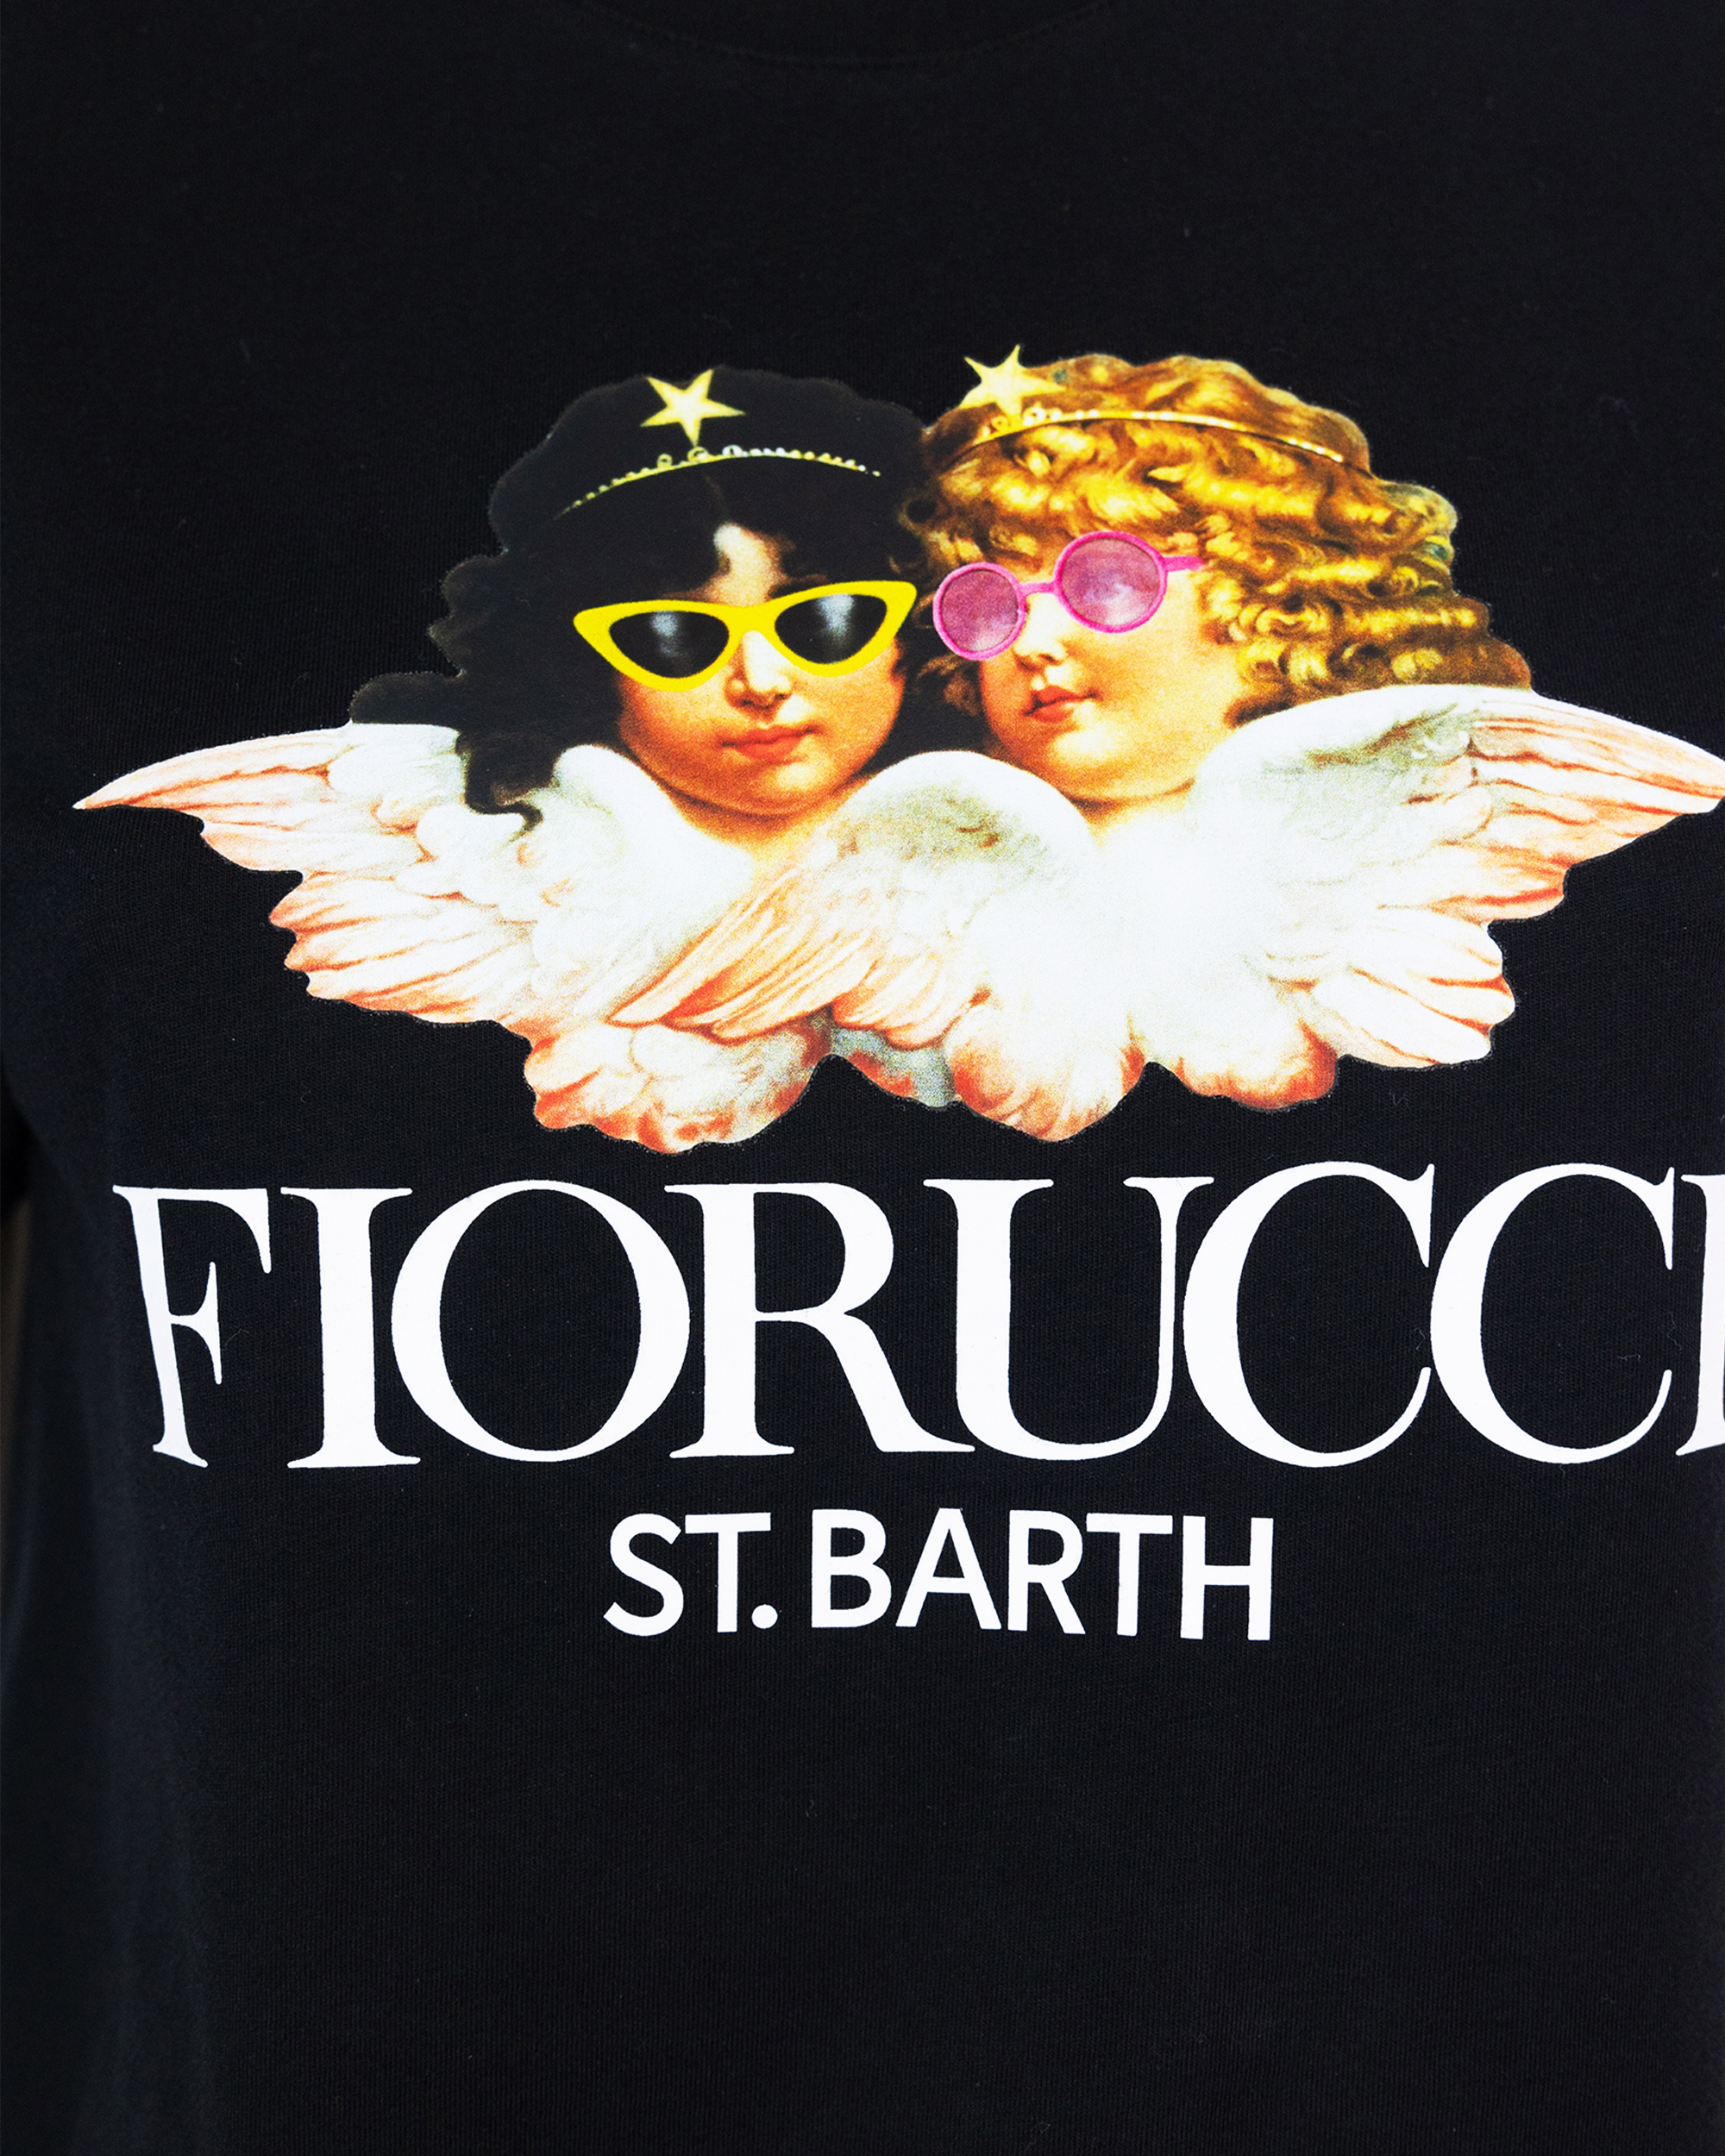 Shop Mc2 Saint Barth Black Fiorucci T-shirt In 05587f